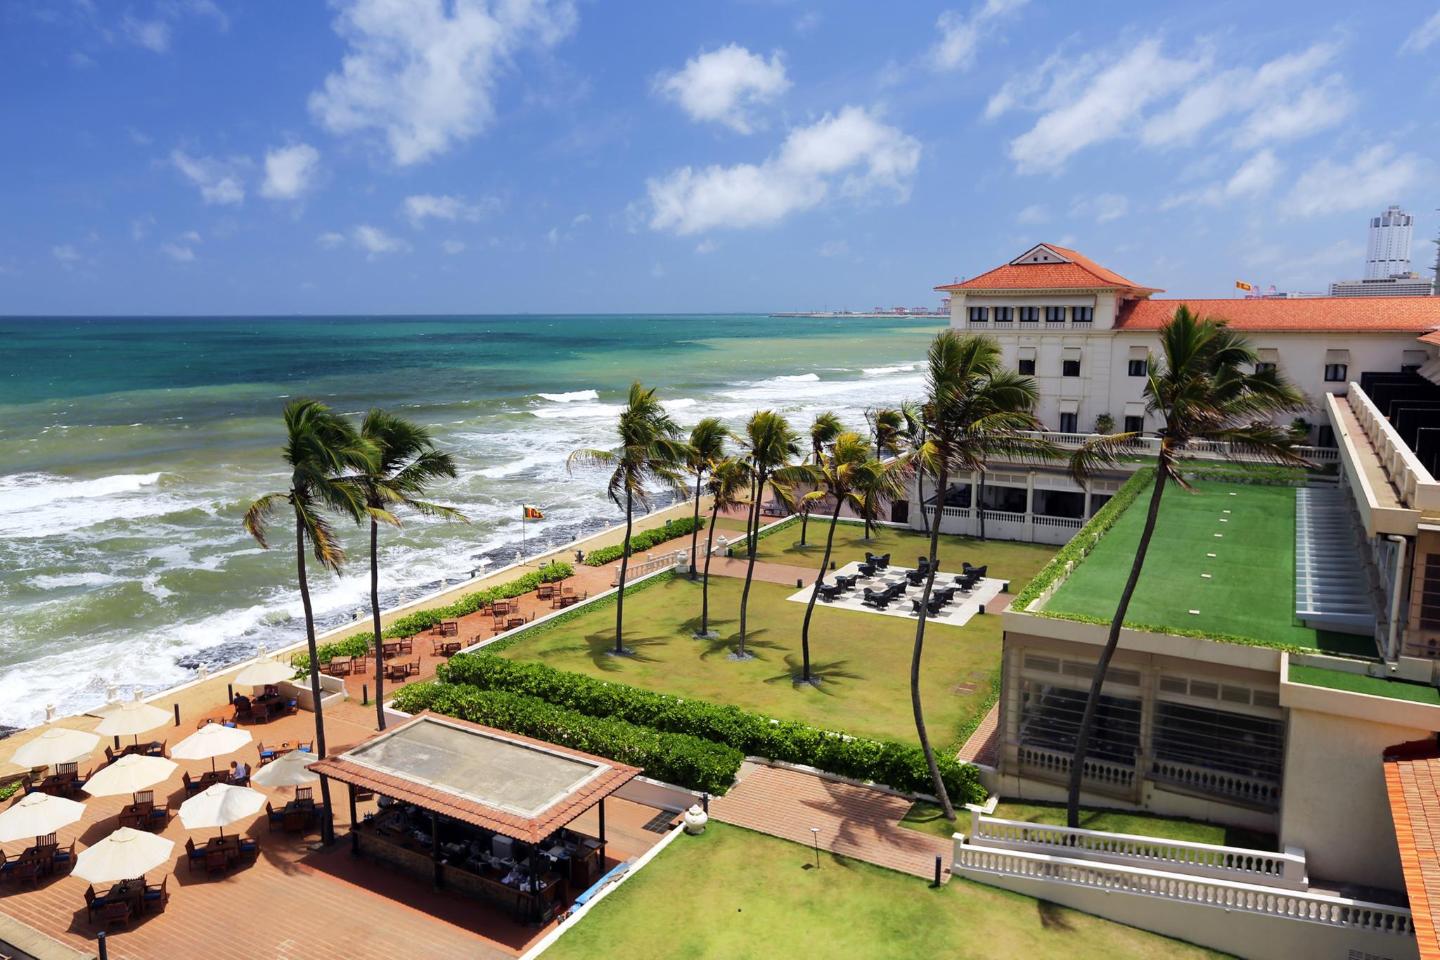 The 10 best beach hotels in Colombo, Sri Lanka | Booking.com